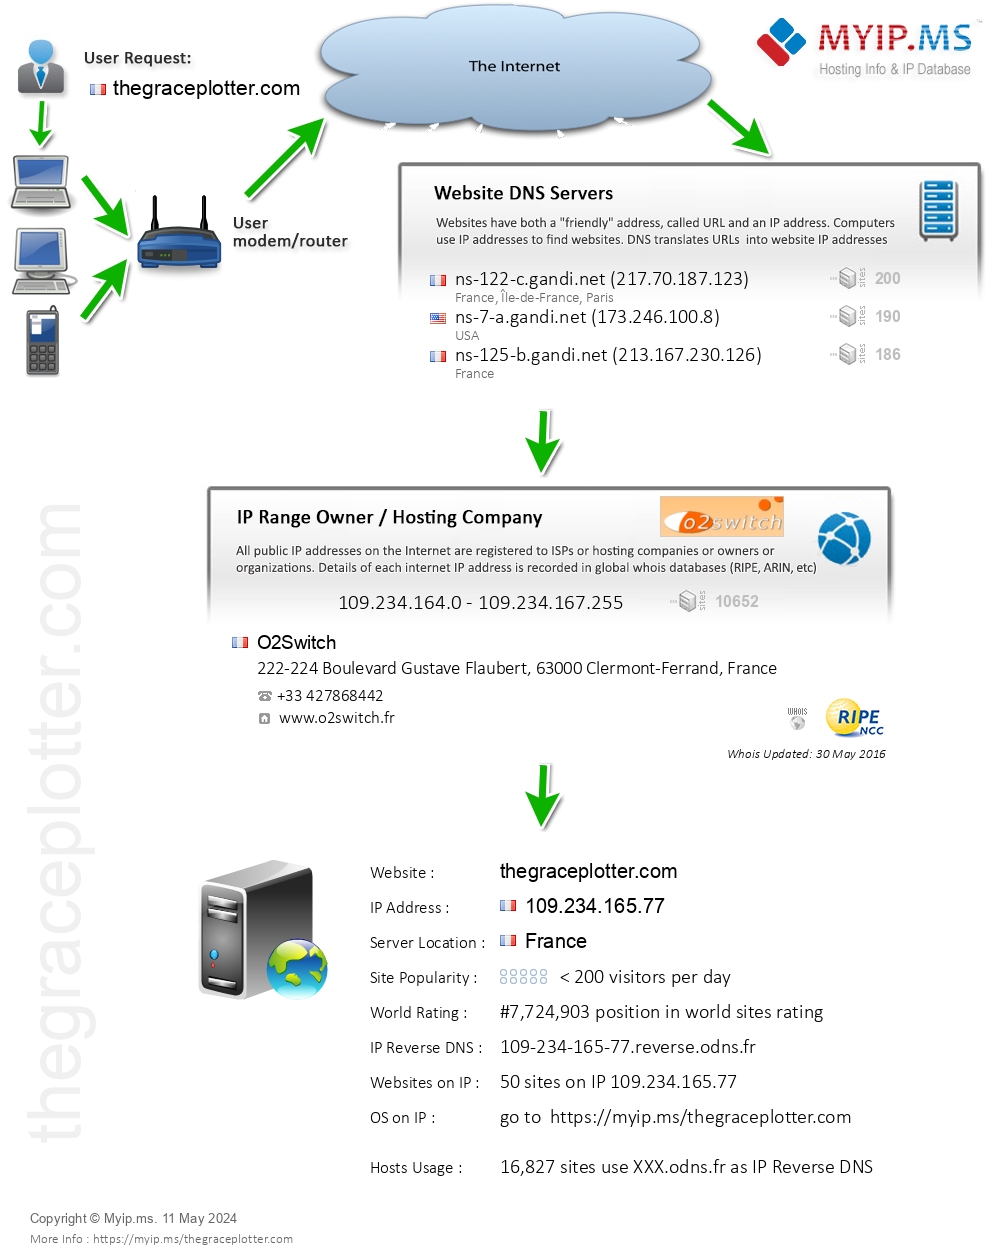 Thegraceplotter.com - Website Hosting Visual IP Diagram